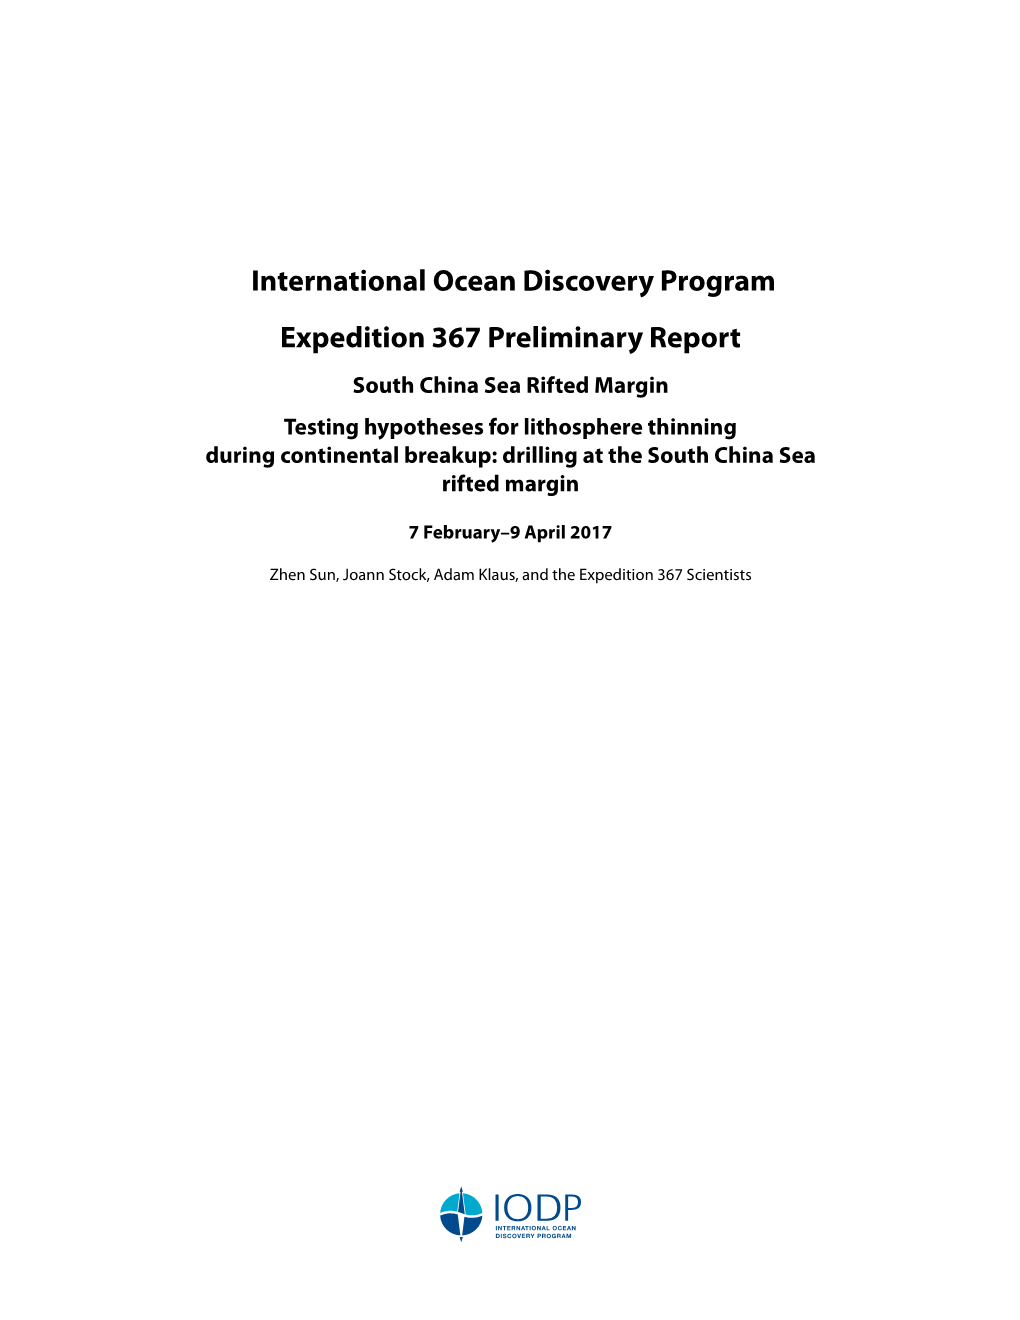 International Ocean Discovery Program Expedition